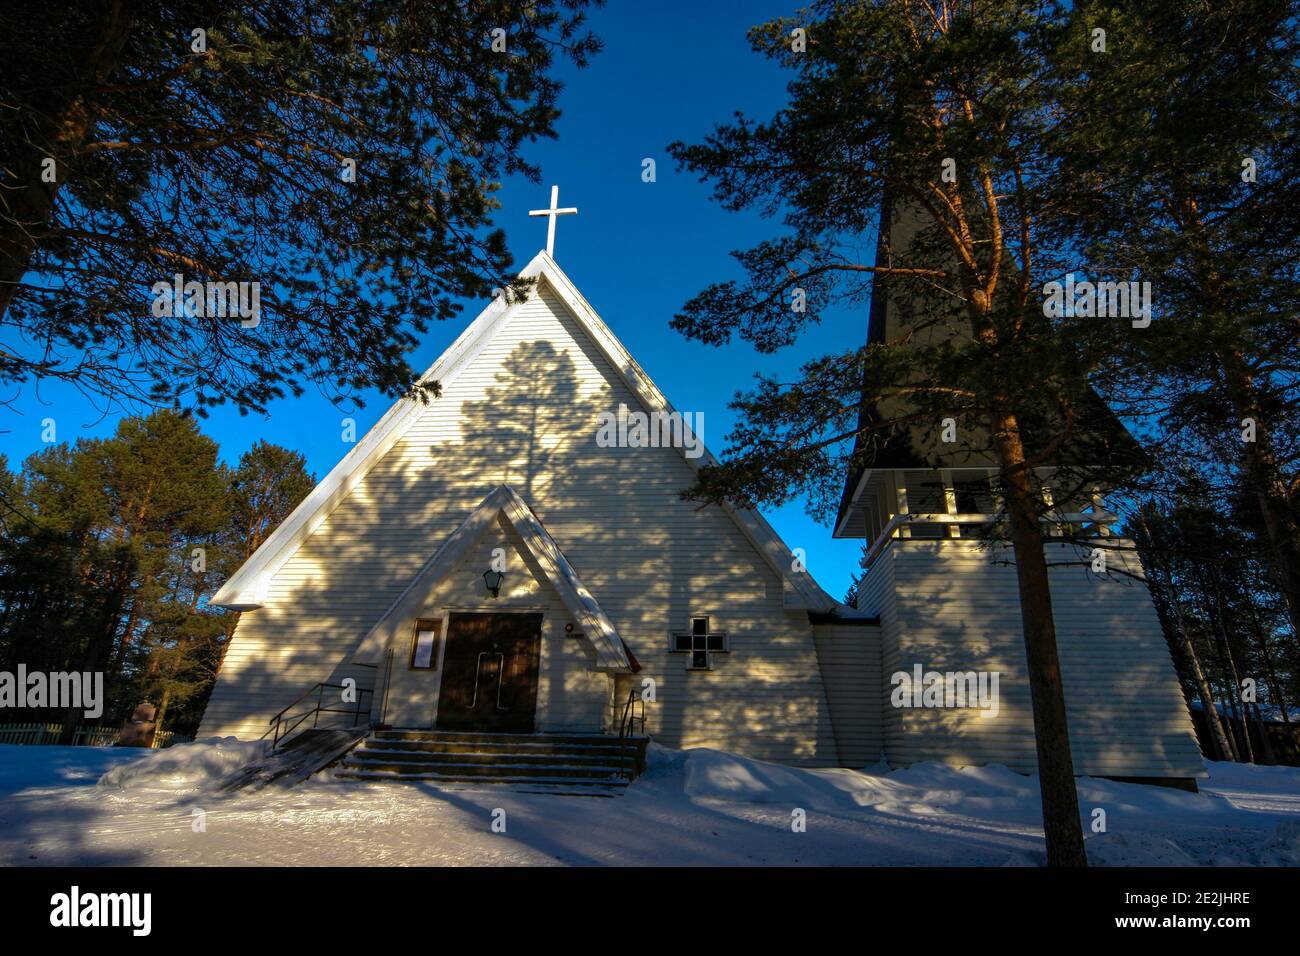 Inari Sami Church, Lapland - Inarin saamelaiskirkko, Suomi, Finland, built in 1952. Stock Photo